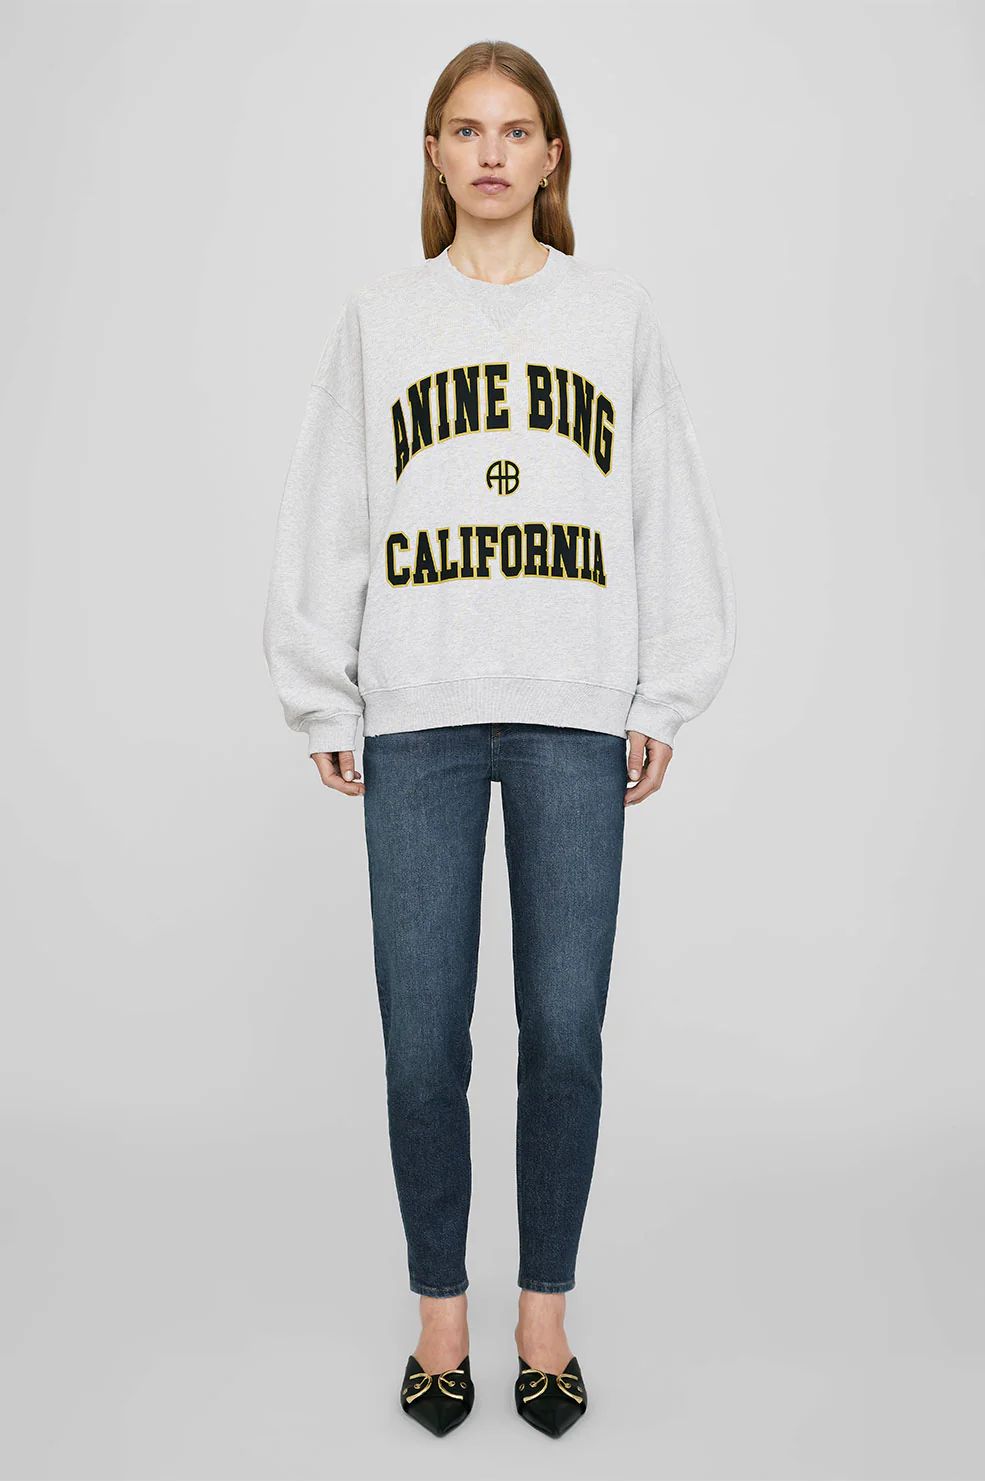 Jaci Sweatshirt Anine Bing California | Anine Bing